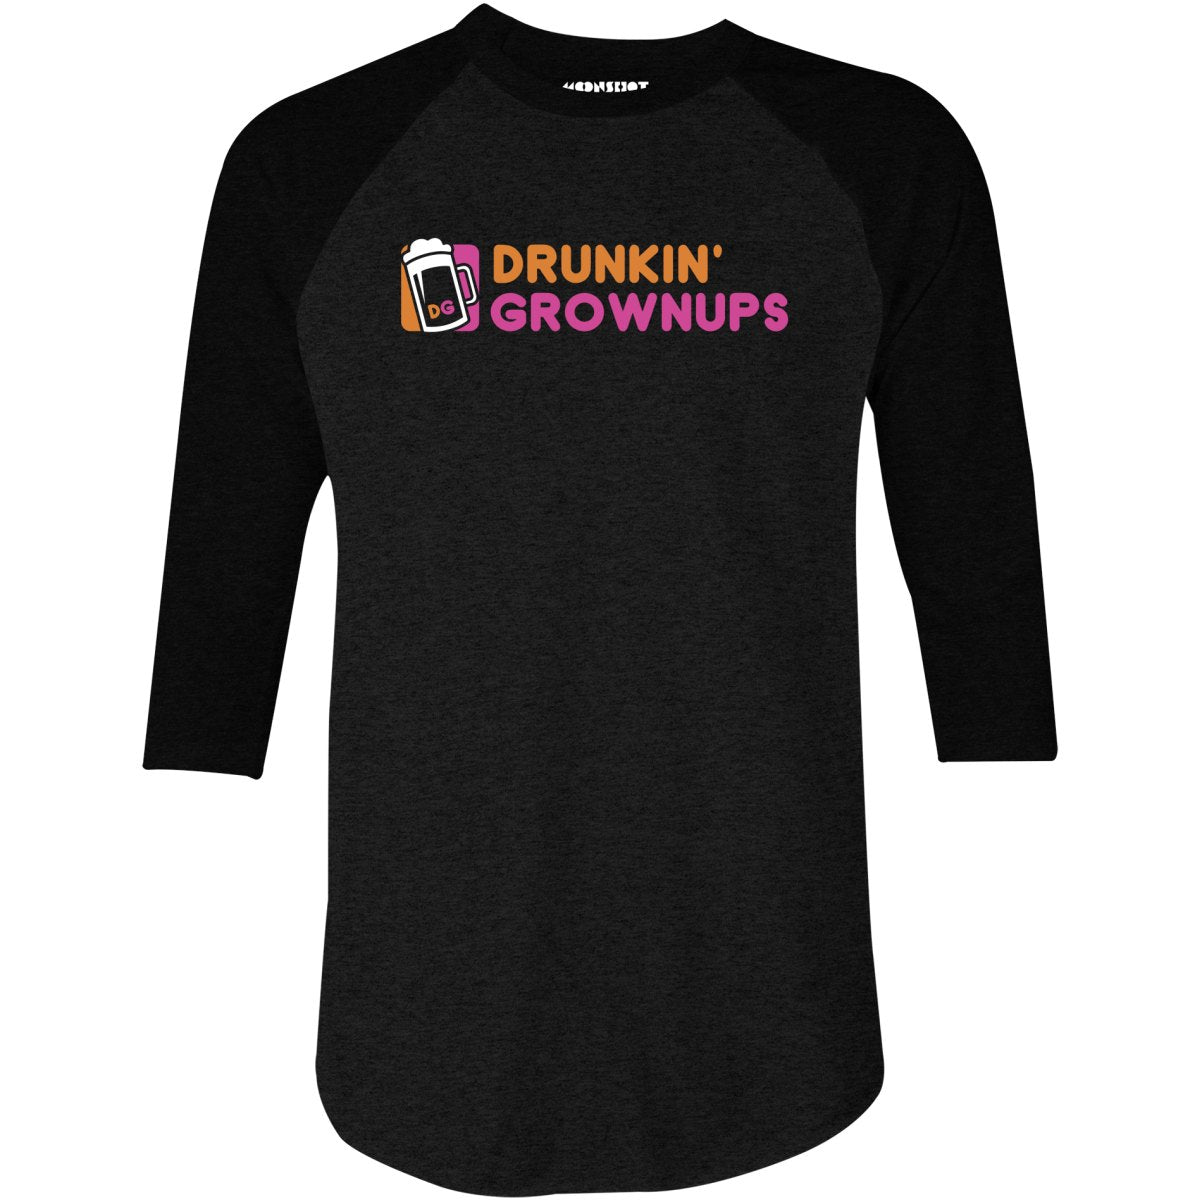 Drunkin' Grownups - 3/4 Sleeve Raglan T-Shirt